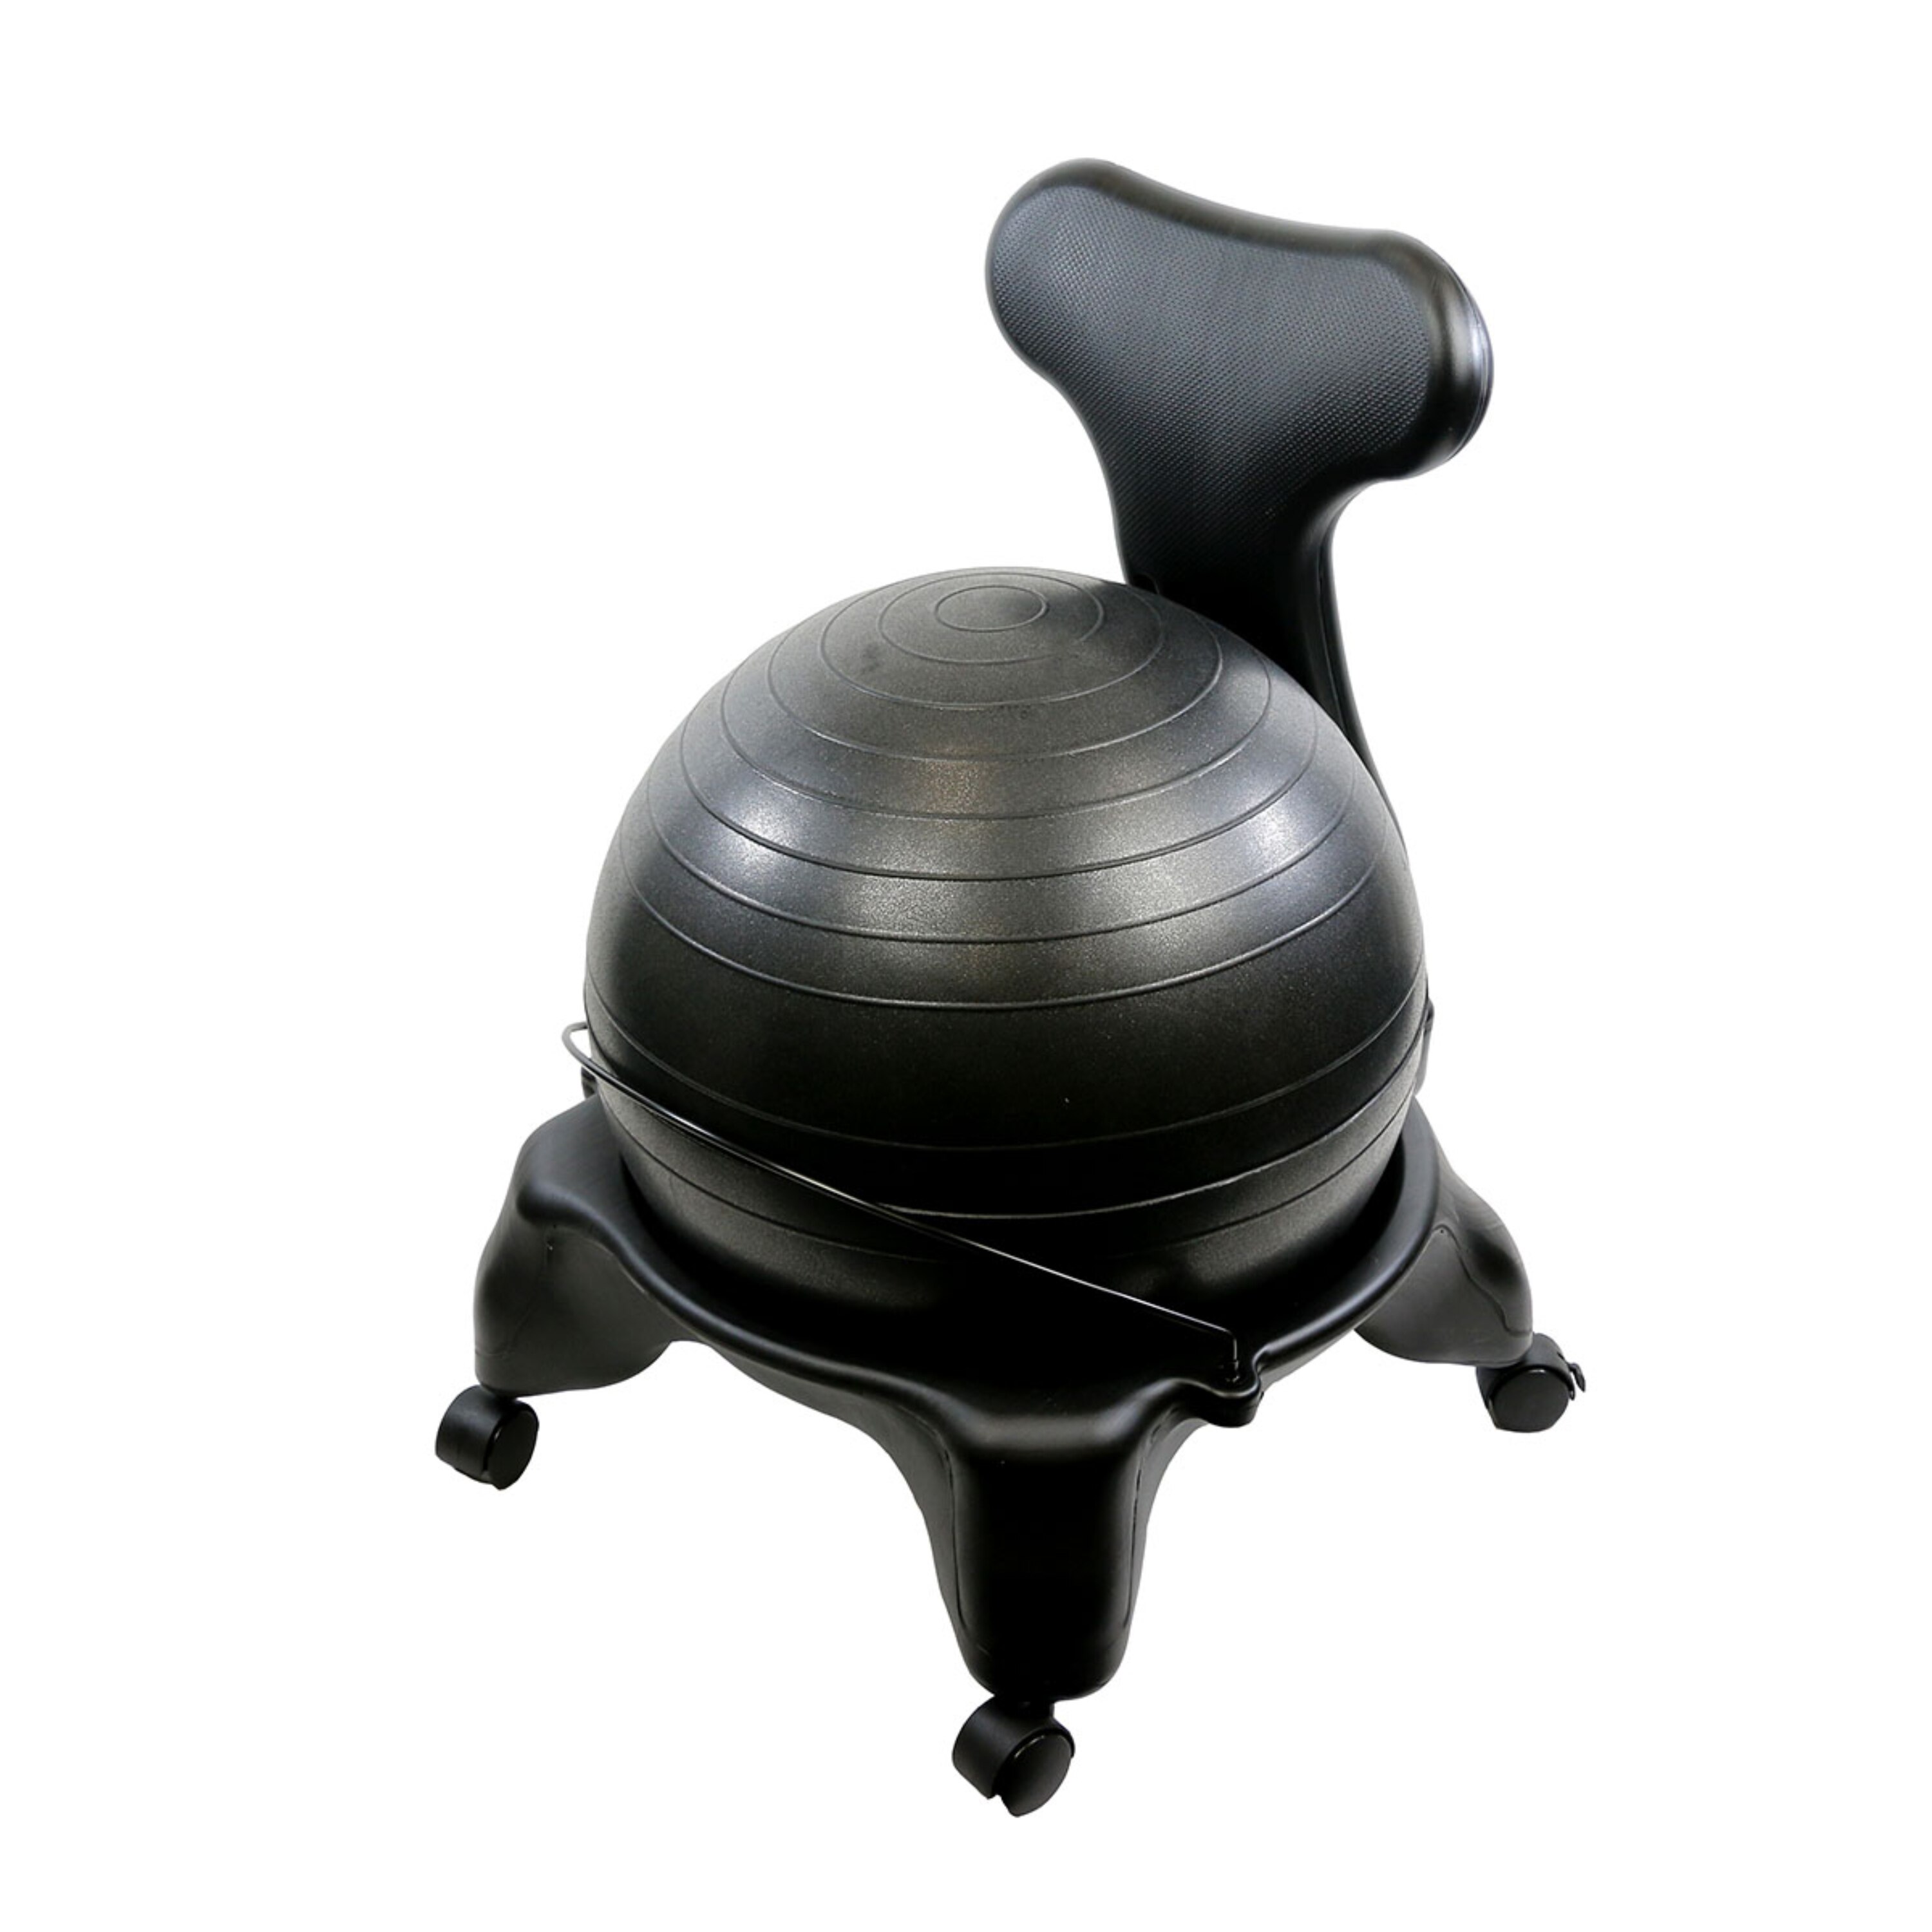 CanDo Plastic Ball Chair, Adult, 22", Black